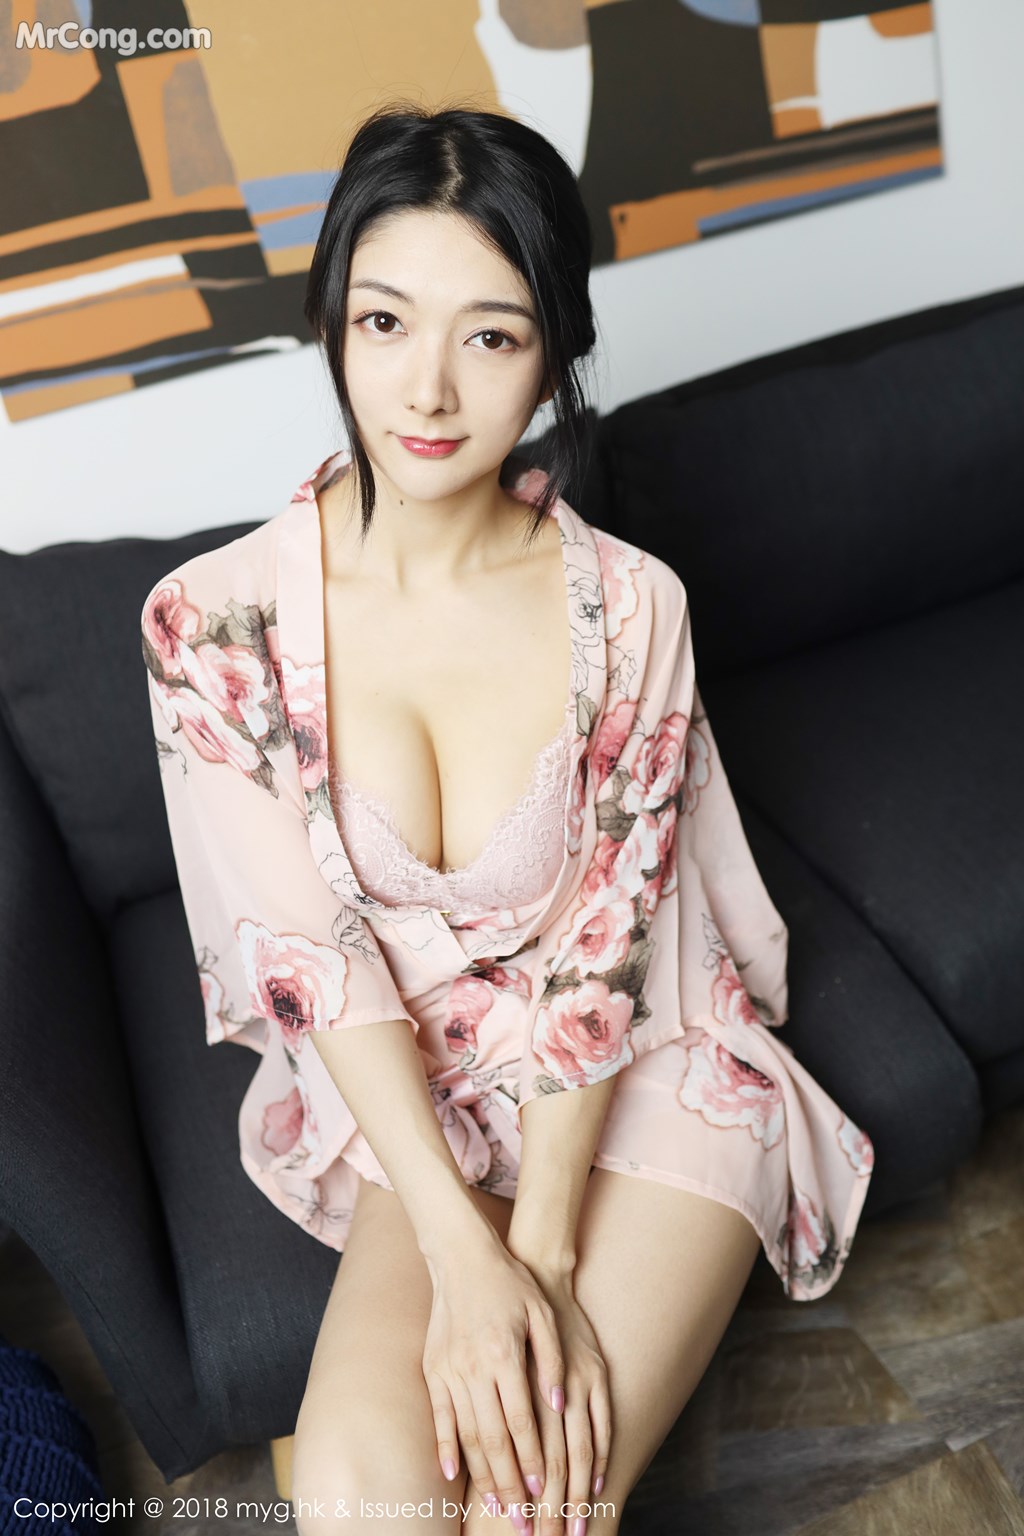 MyGirl Vol.334: Model Xiao Reba (Angela 喜欢 猫) (46 photos) photo 1-8